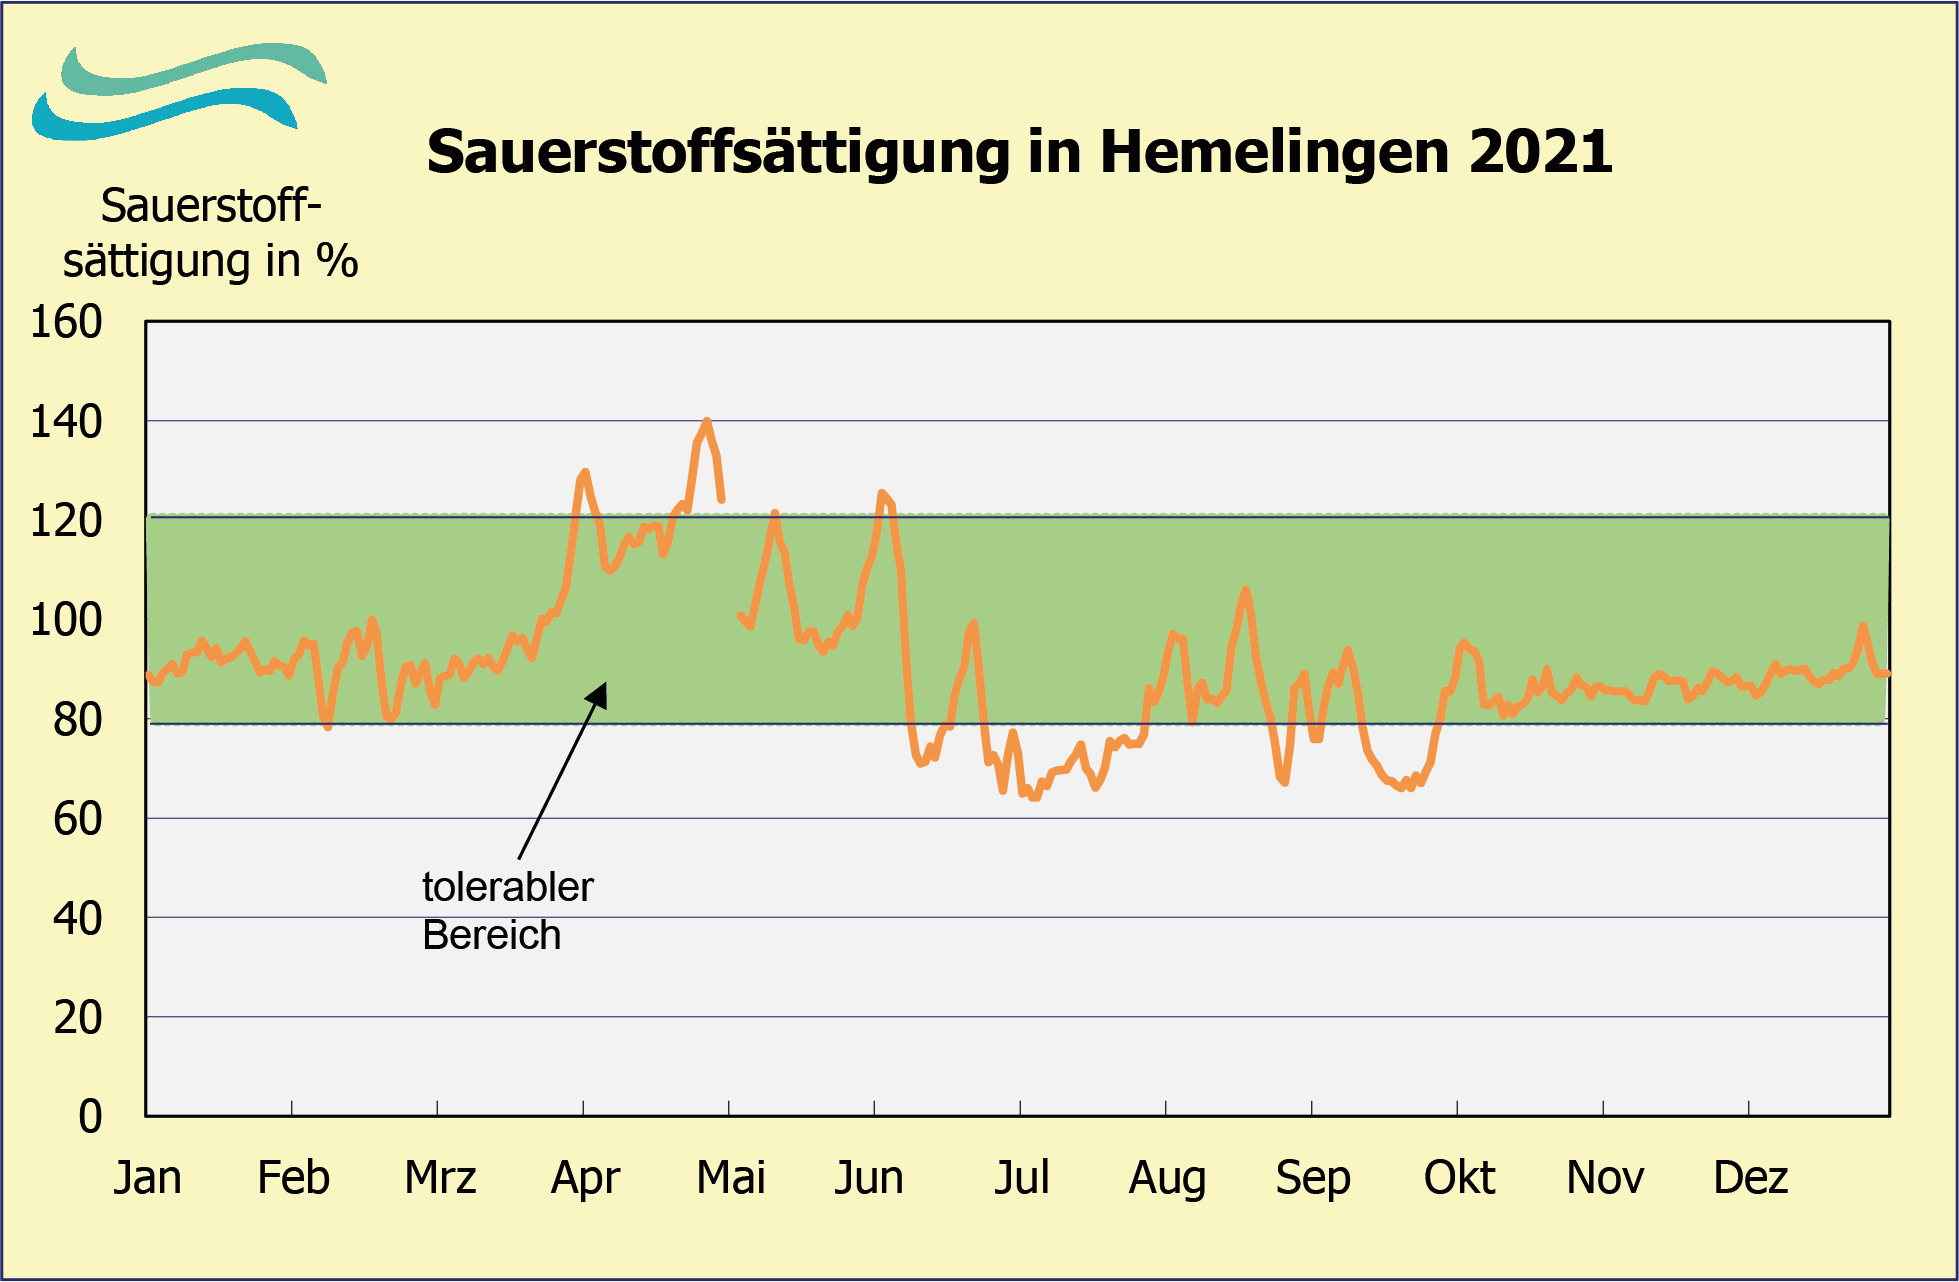 Sauerstoffsättigung in Hemelingen 2021 (FGG Weser)